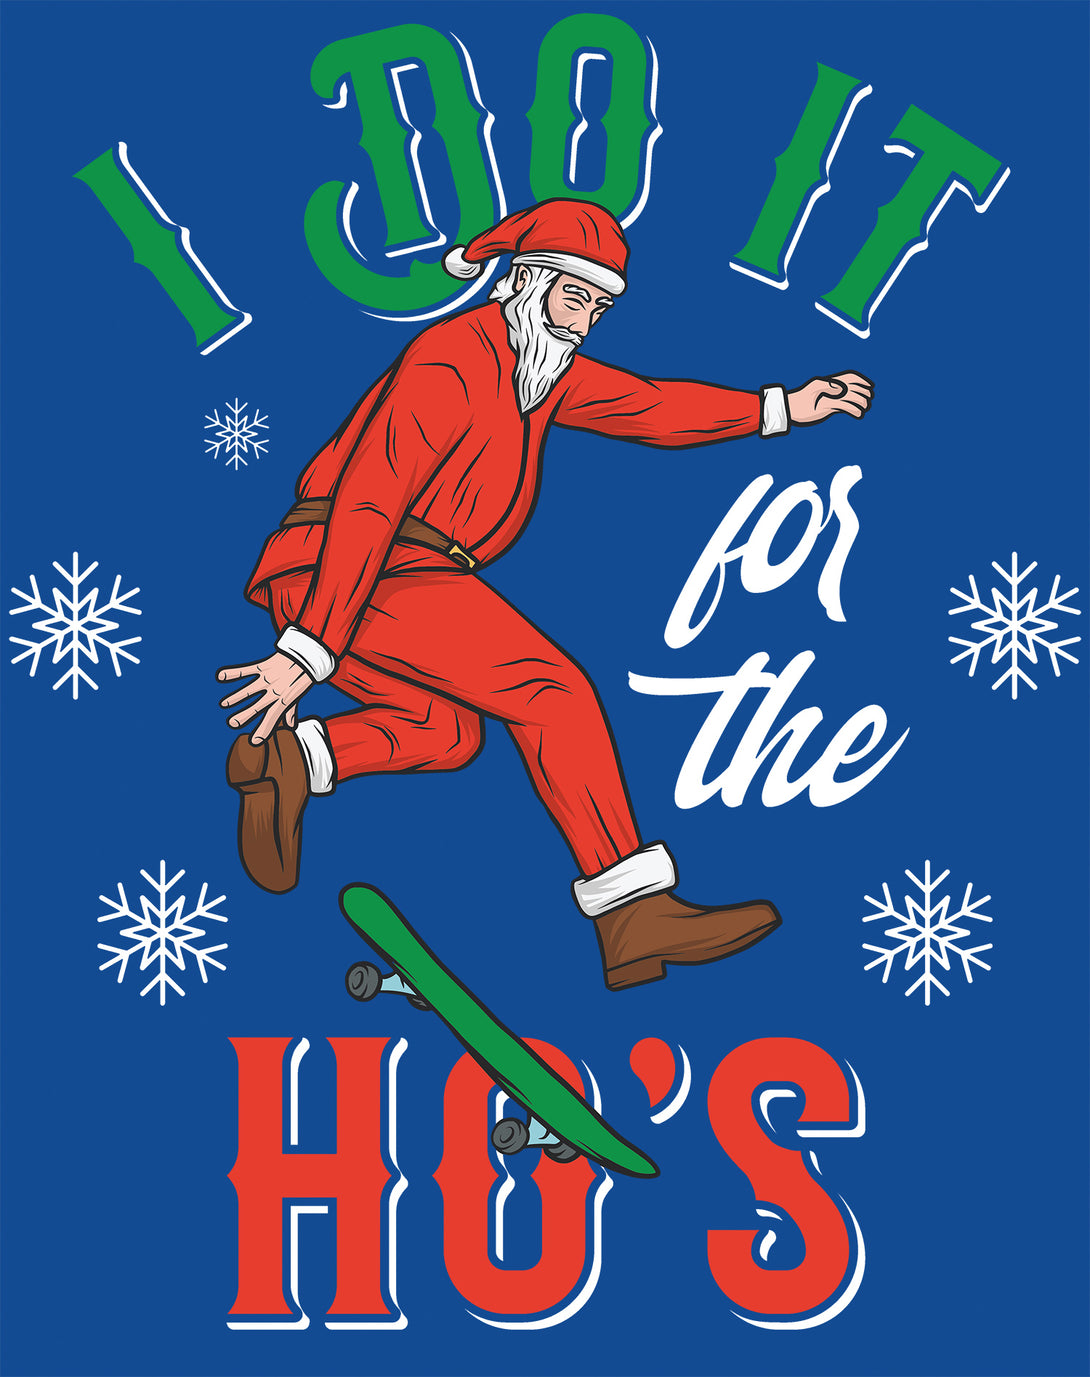 Christmas Santa I Do It For The Ho's Meme Funny Dad Joke Lol Men's T-Shirt Blue - Urban Species Design Close Up